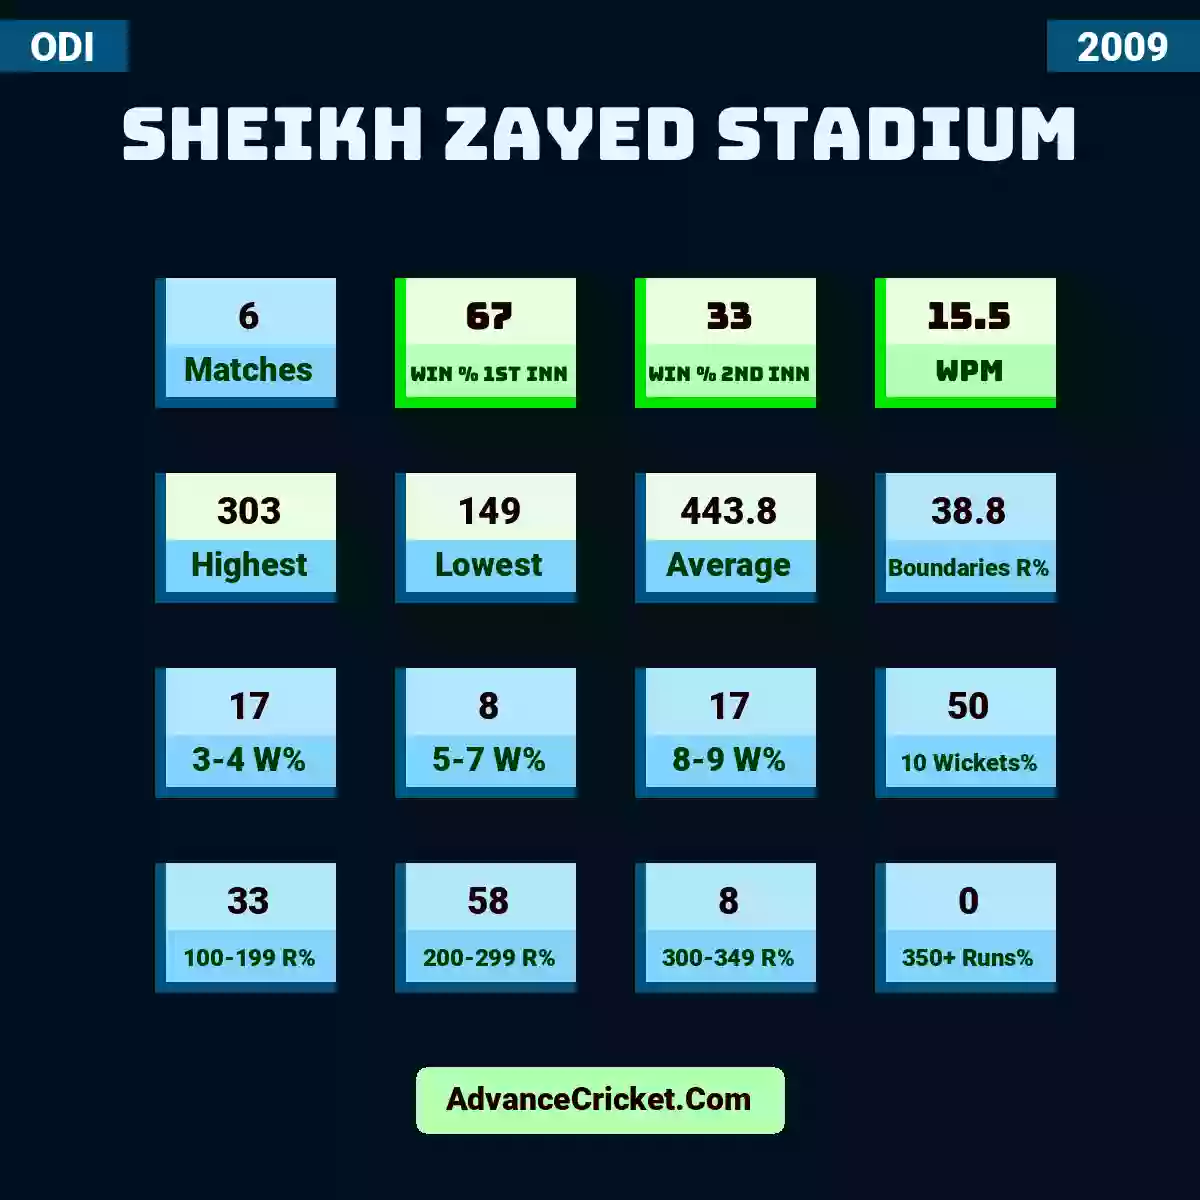 Image showing Sheikh Zayed Stadium with Matches: 6, Win % 1st Inn: 67, Win % 2nd Inn: 33, WPM: 15.5, Highest: 303, Lowest: 149, Average: 443.8, Boundaries R%: 38.8, 3-4 W%: 17, 5-7 W%: 8, 8-9 W%: 17, 10 Wickets%: 50, 100-199 R%: 33, 200-299 R%: 58, 300-349 R%: 8, 350+ Runs%: 0.